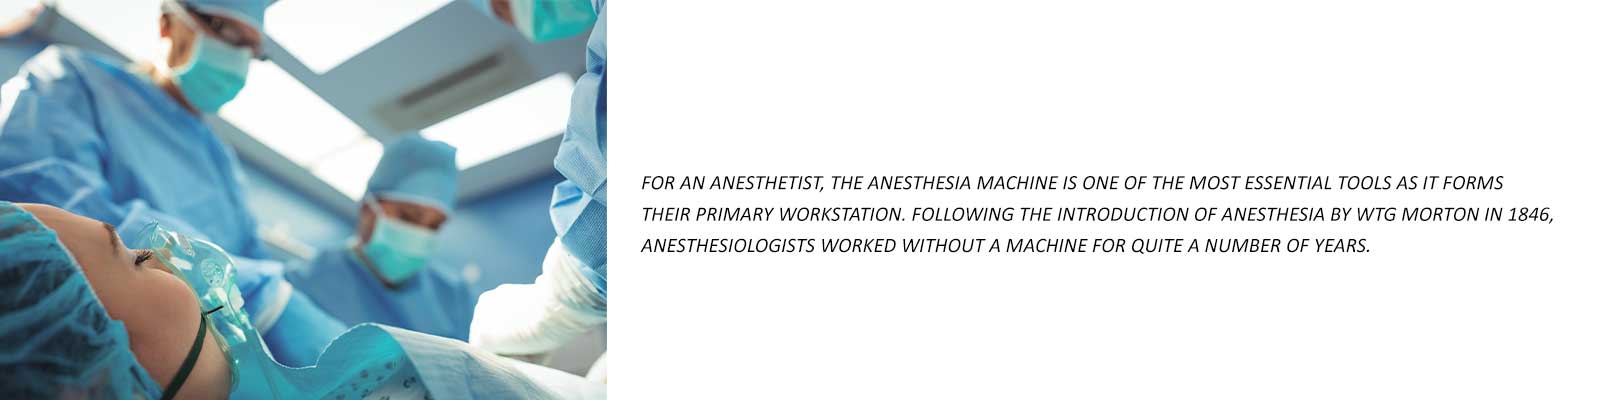 Anesthesia Machine Banner Image